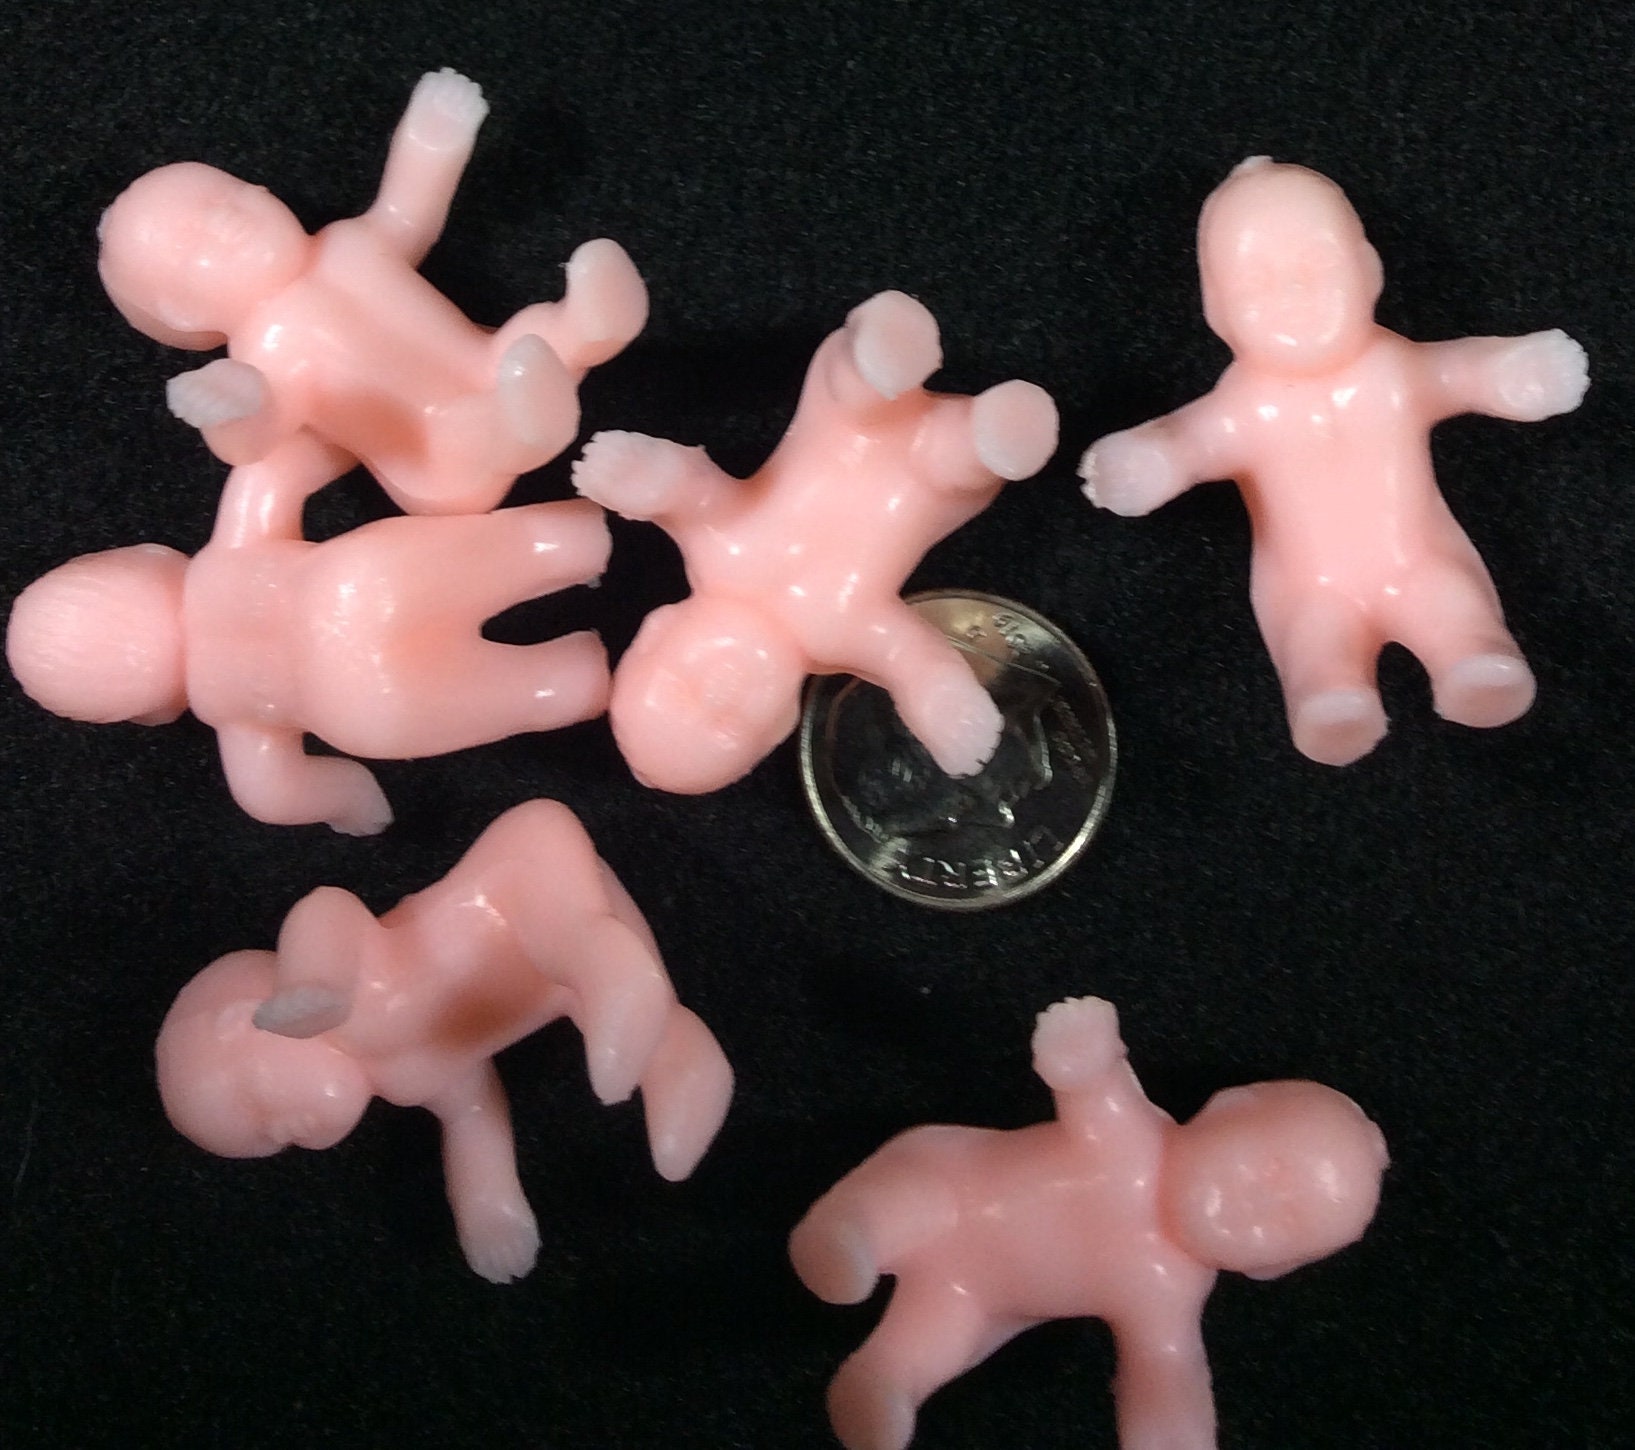 Tiny Plastic Babies 